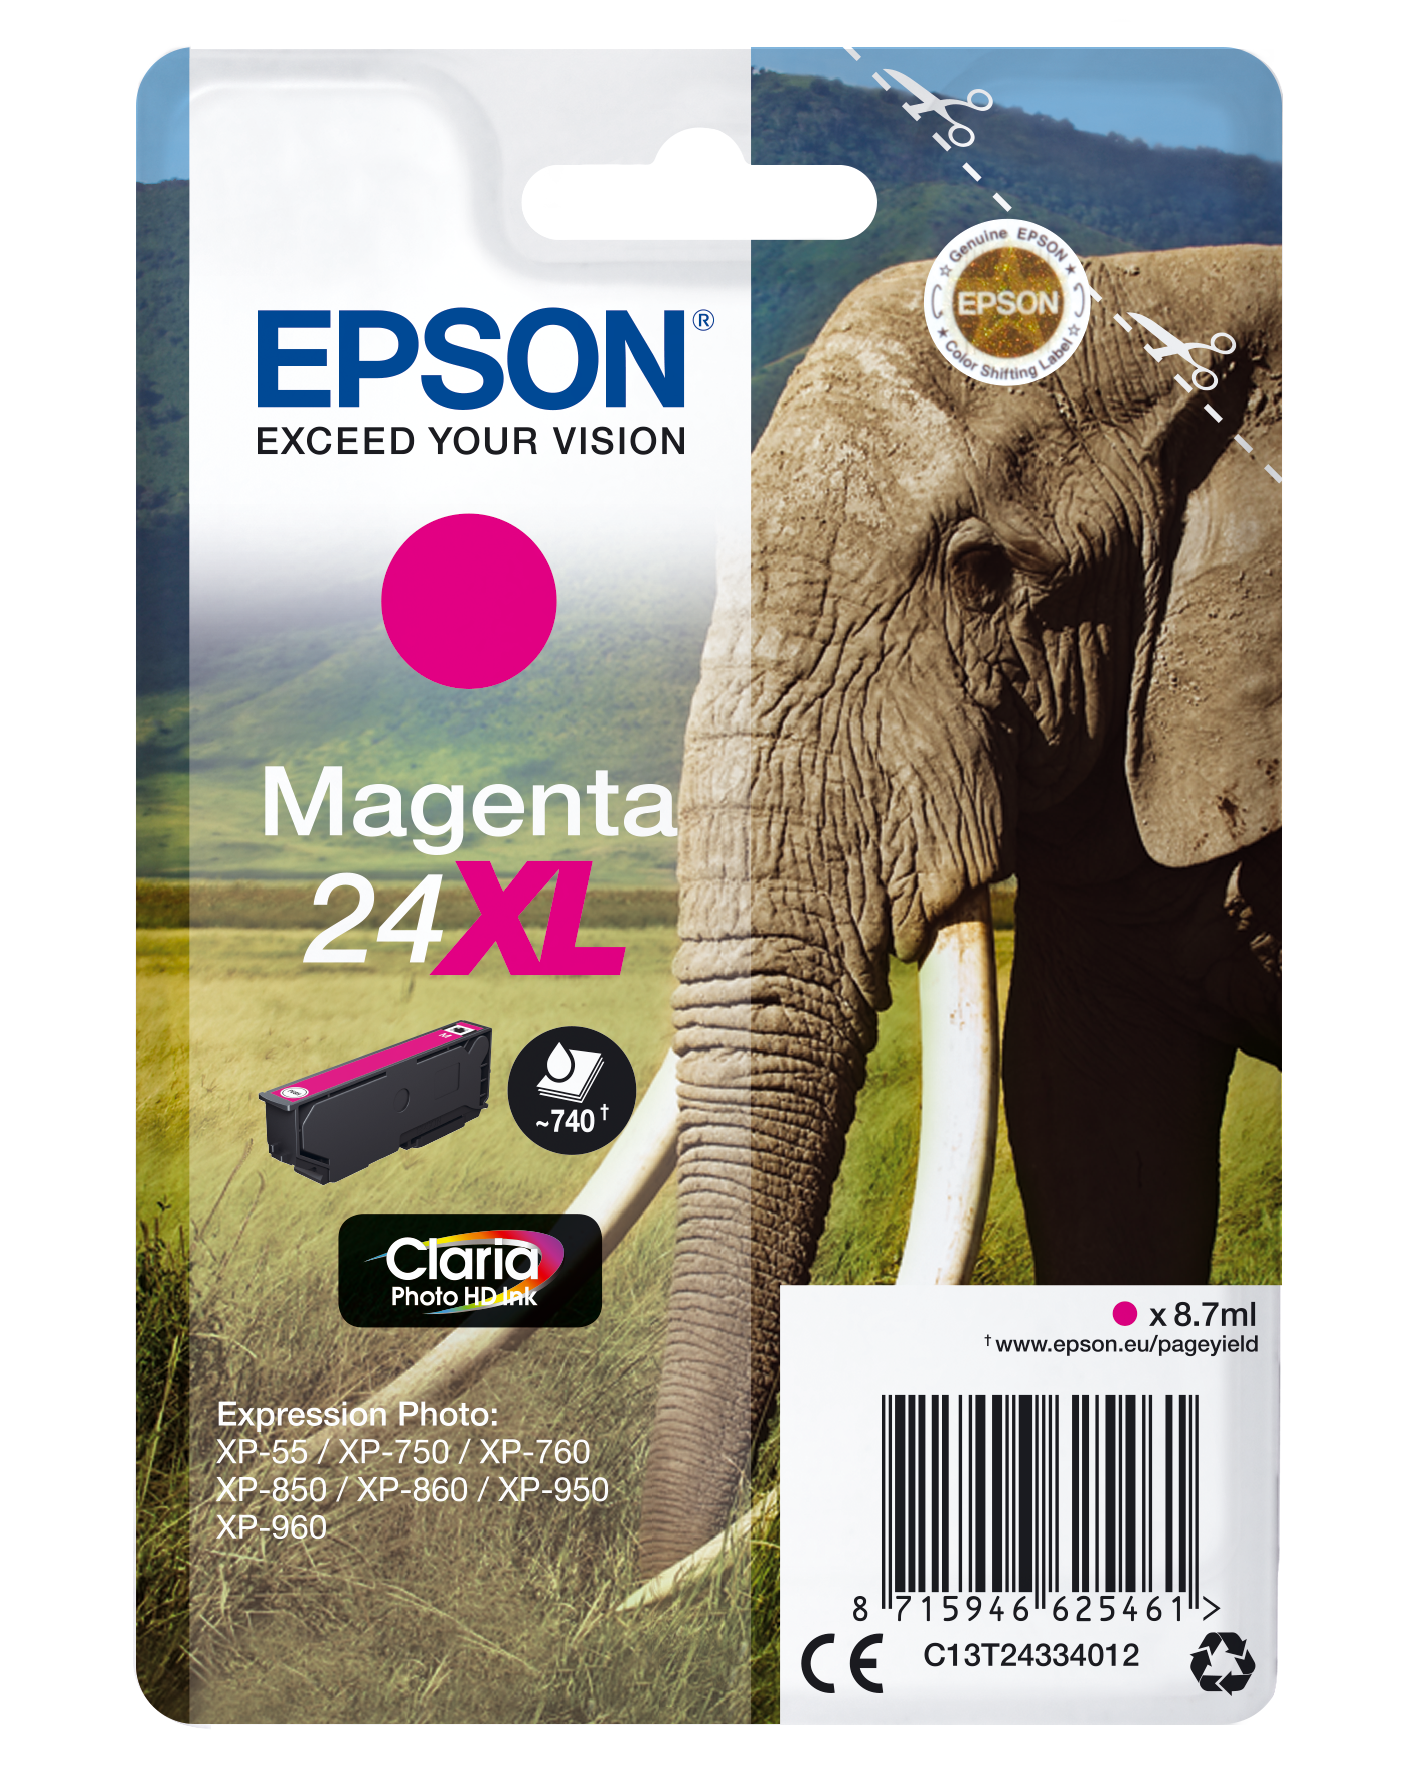 Epson Elephant Singlepack Magenta 24XL Claria Photo HD Ink single pack / magenta